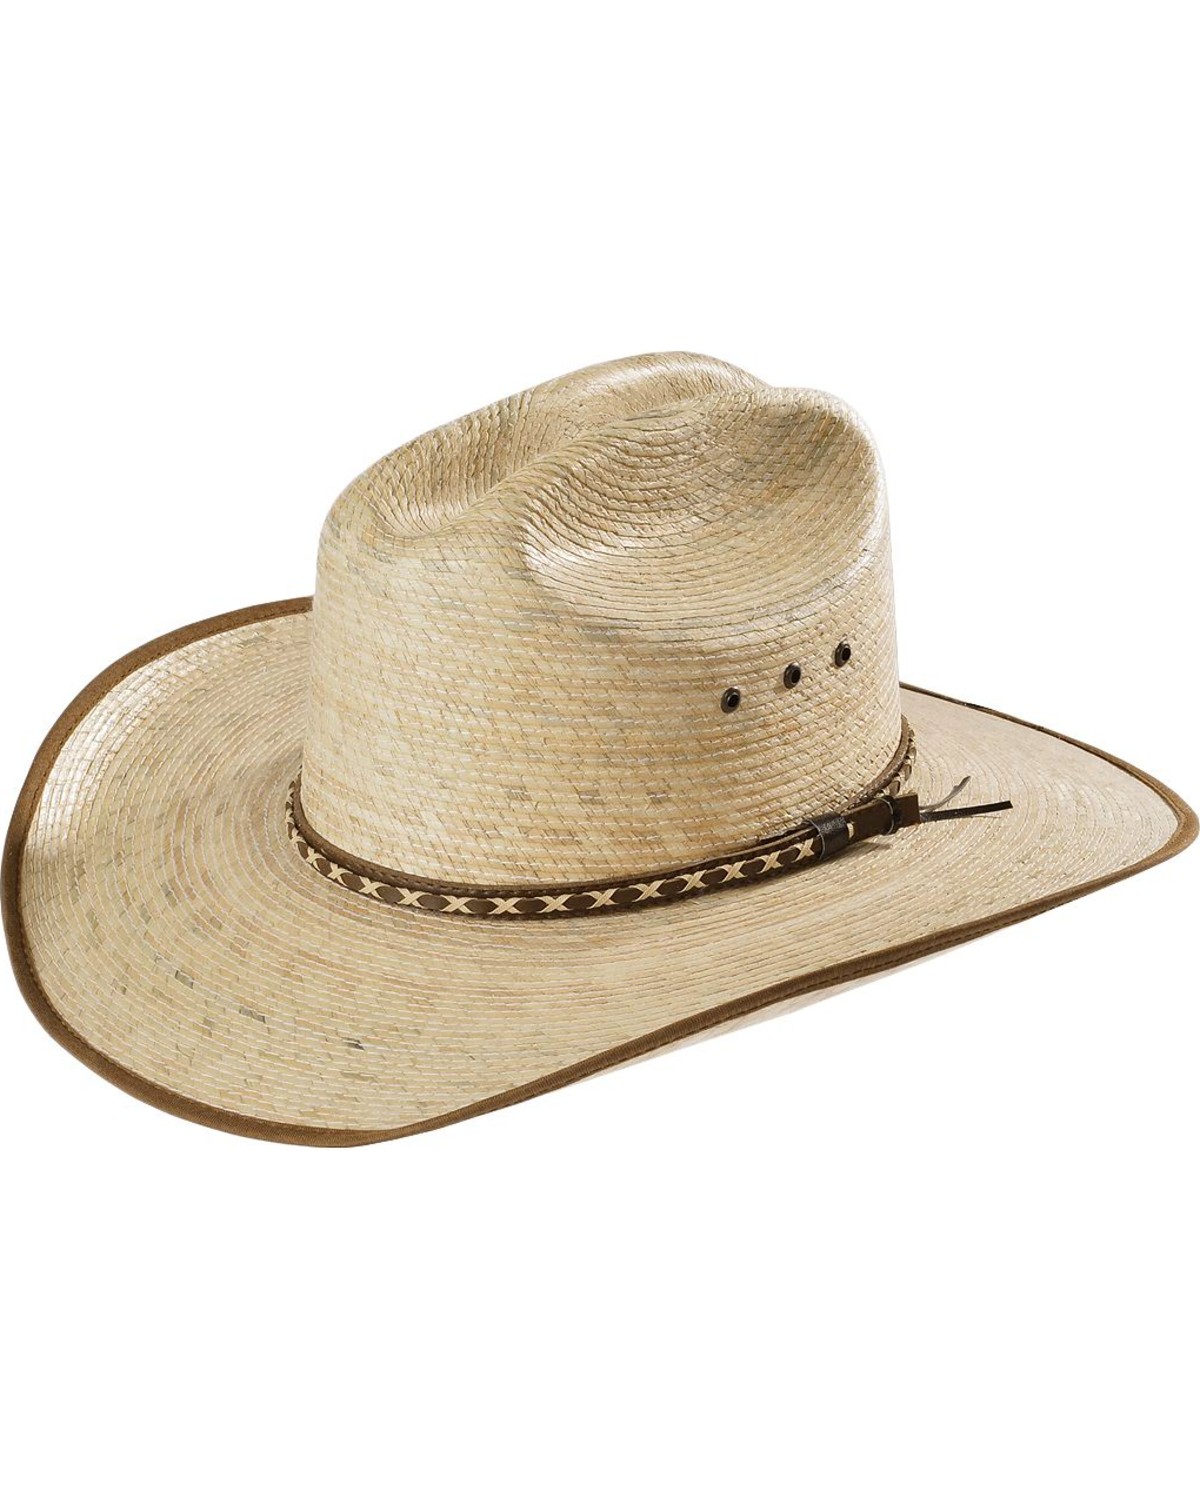 Resistol Kids' Brush Hog Jr. Straw Cowboy Hat